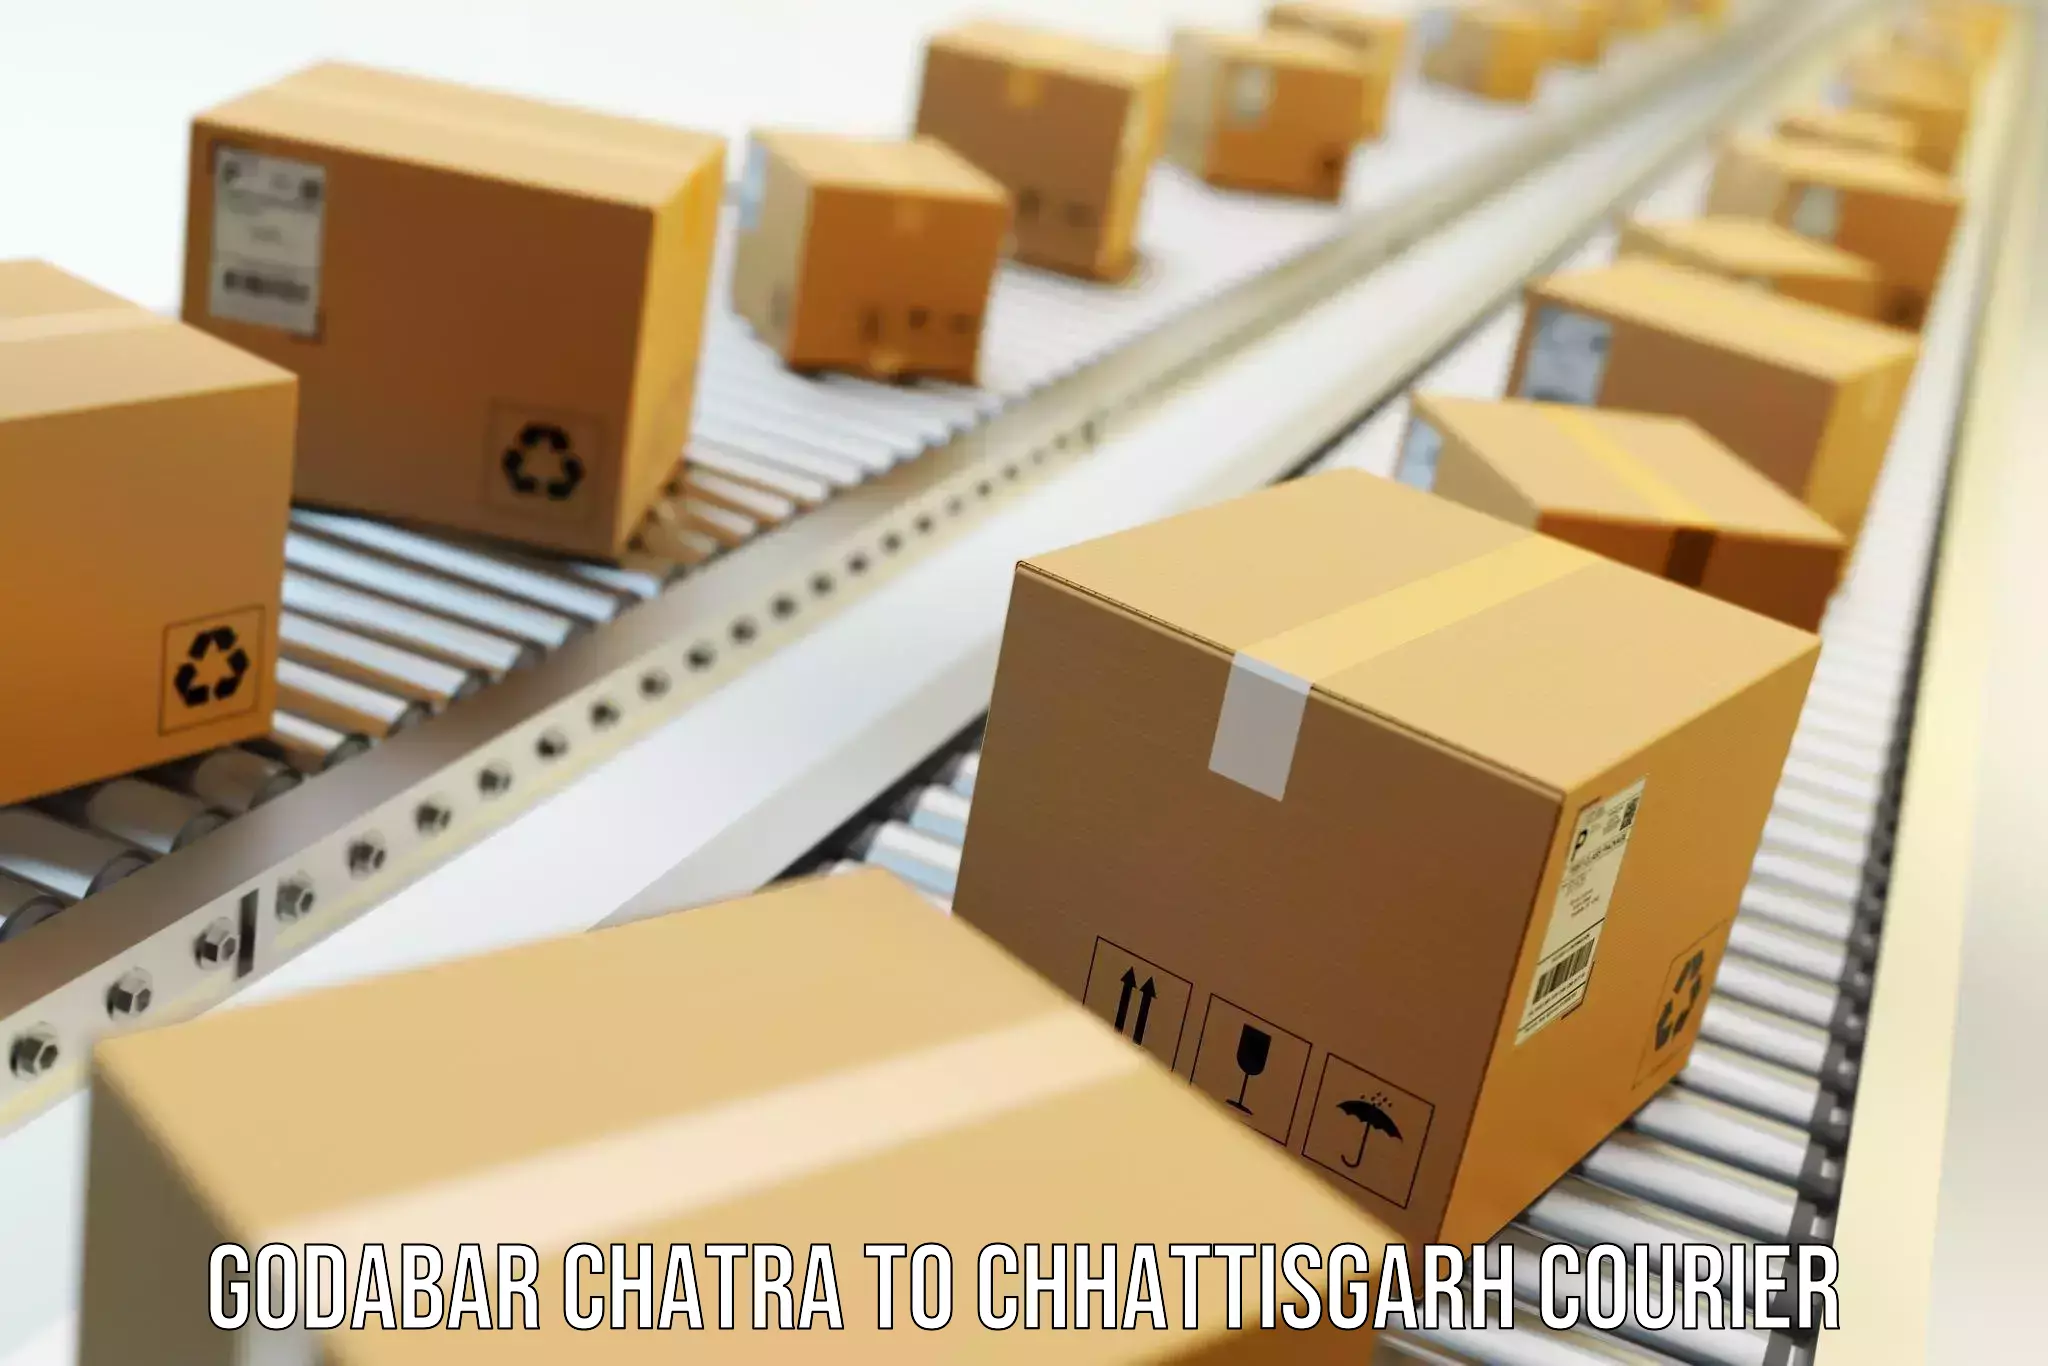 Professional moving company Godabar Chatra to Bhatgaon